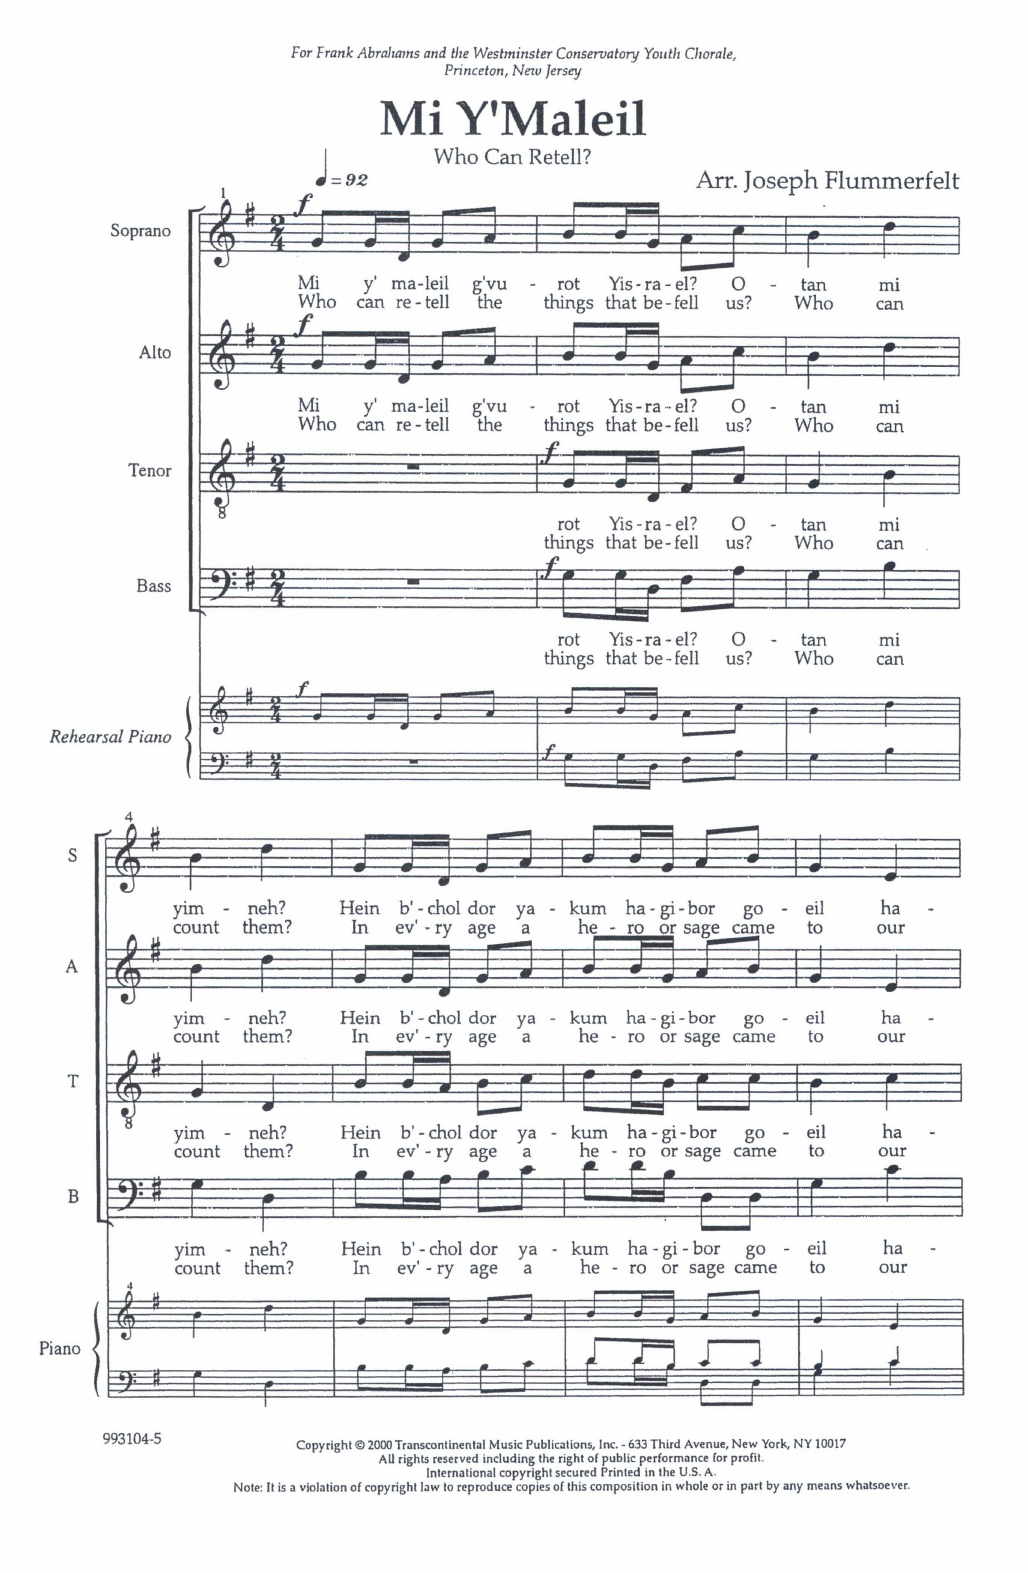 Joseph Flummerfelt Mi Y'maleil (Who Can Retell?) Sheet Music Notes & Chords for SATB Choir - Download or Print PDF